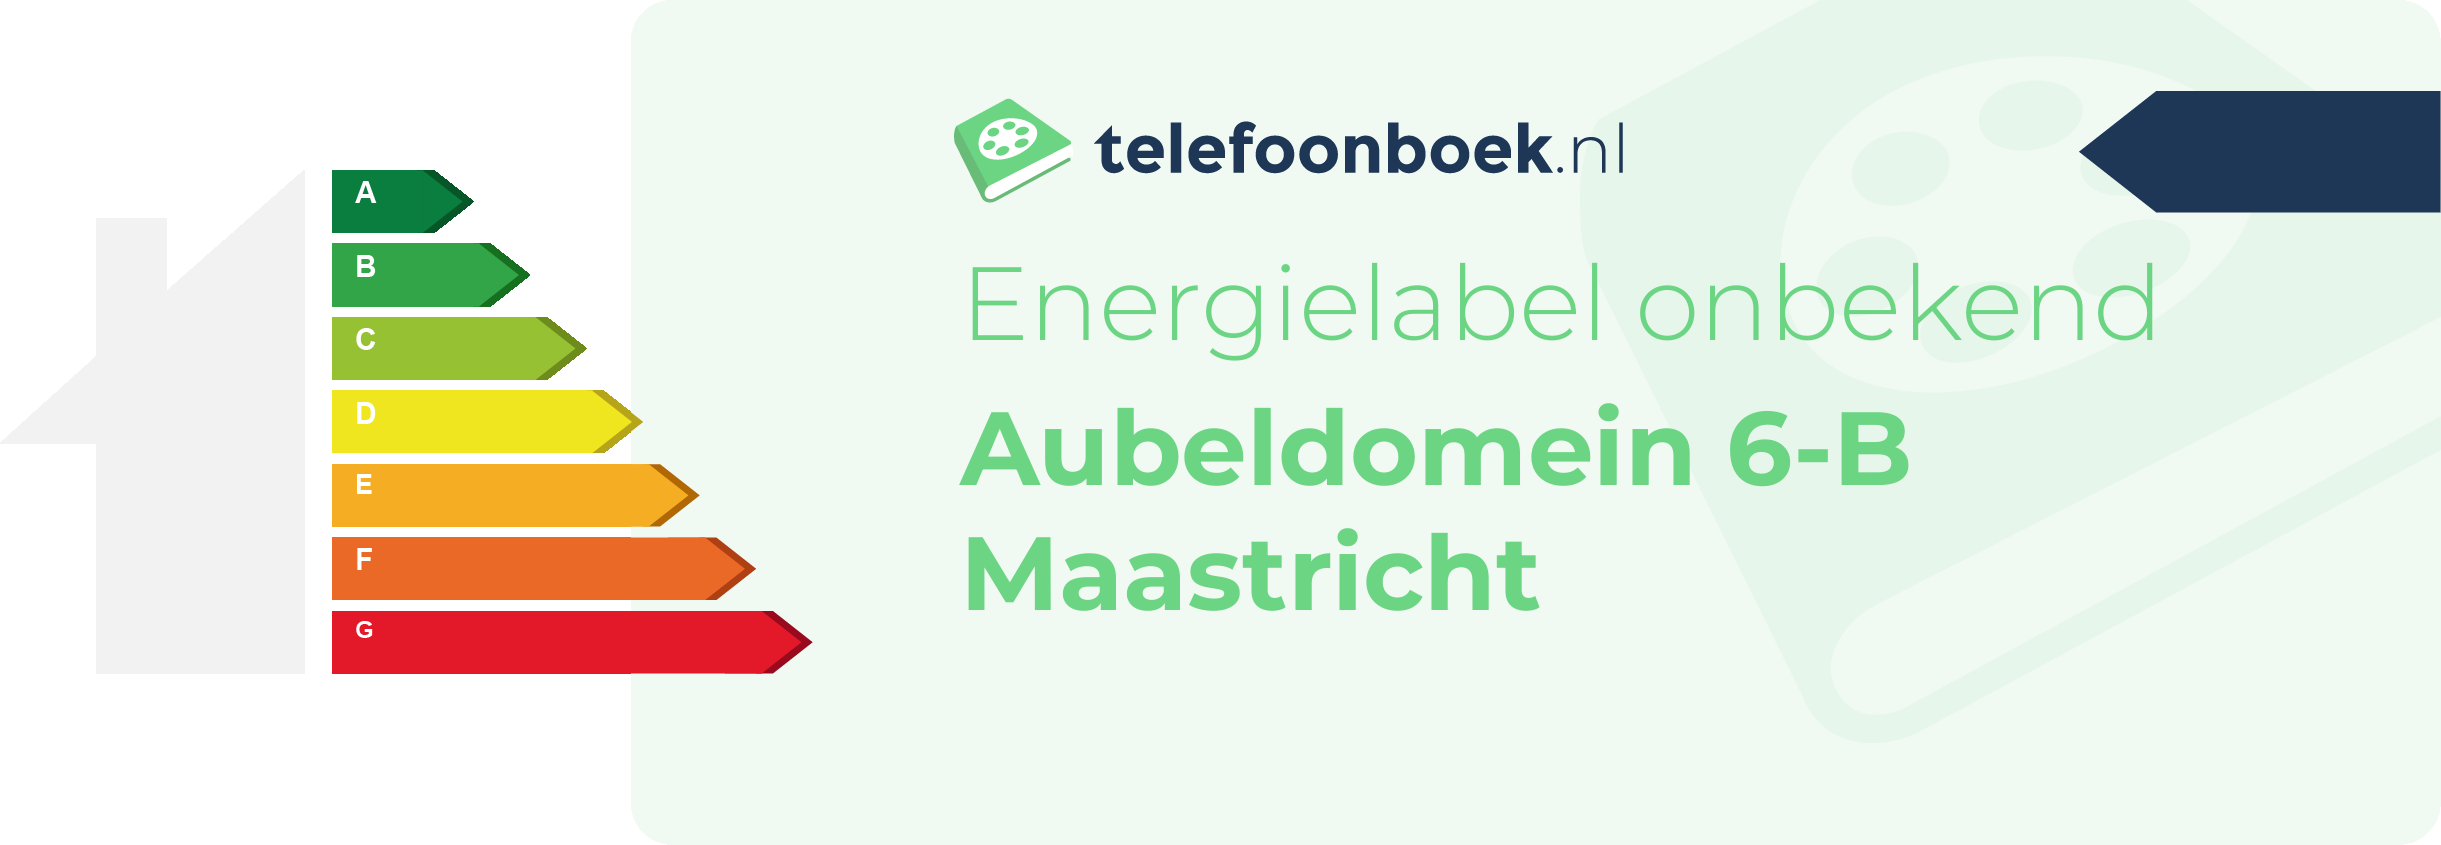 Energielabel Aubeldomein 6-B Maastricht